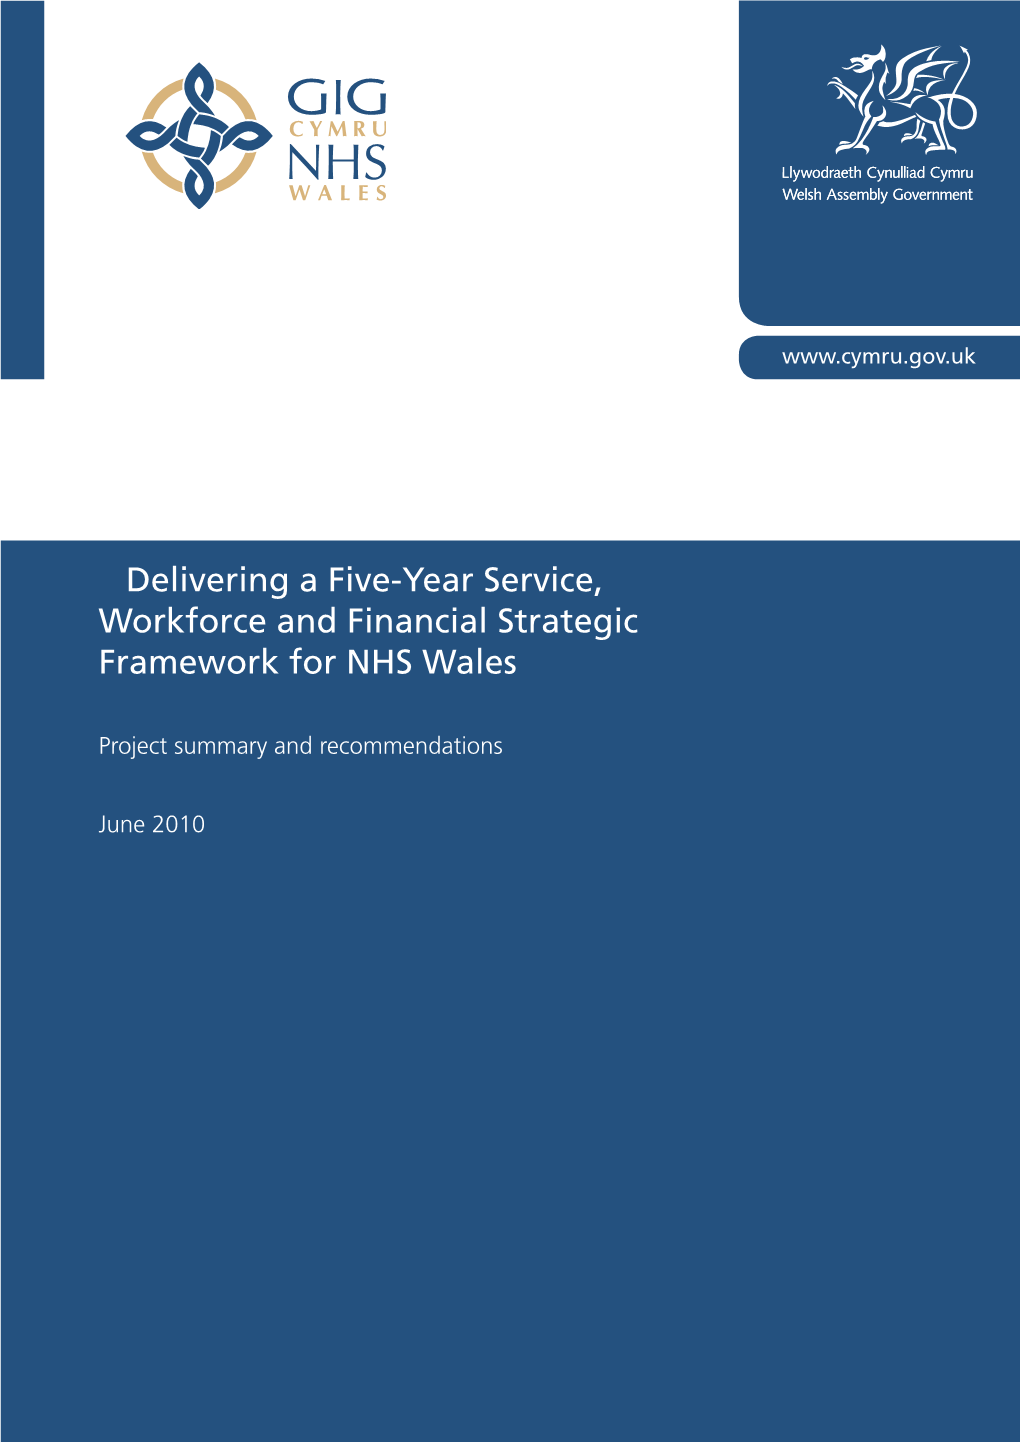 The 5-Year Service, Workforce and Financial Strategic Framework